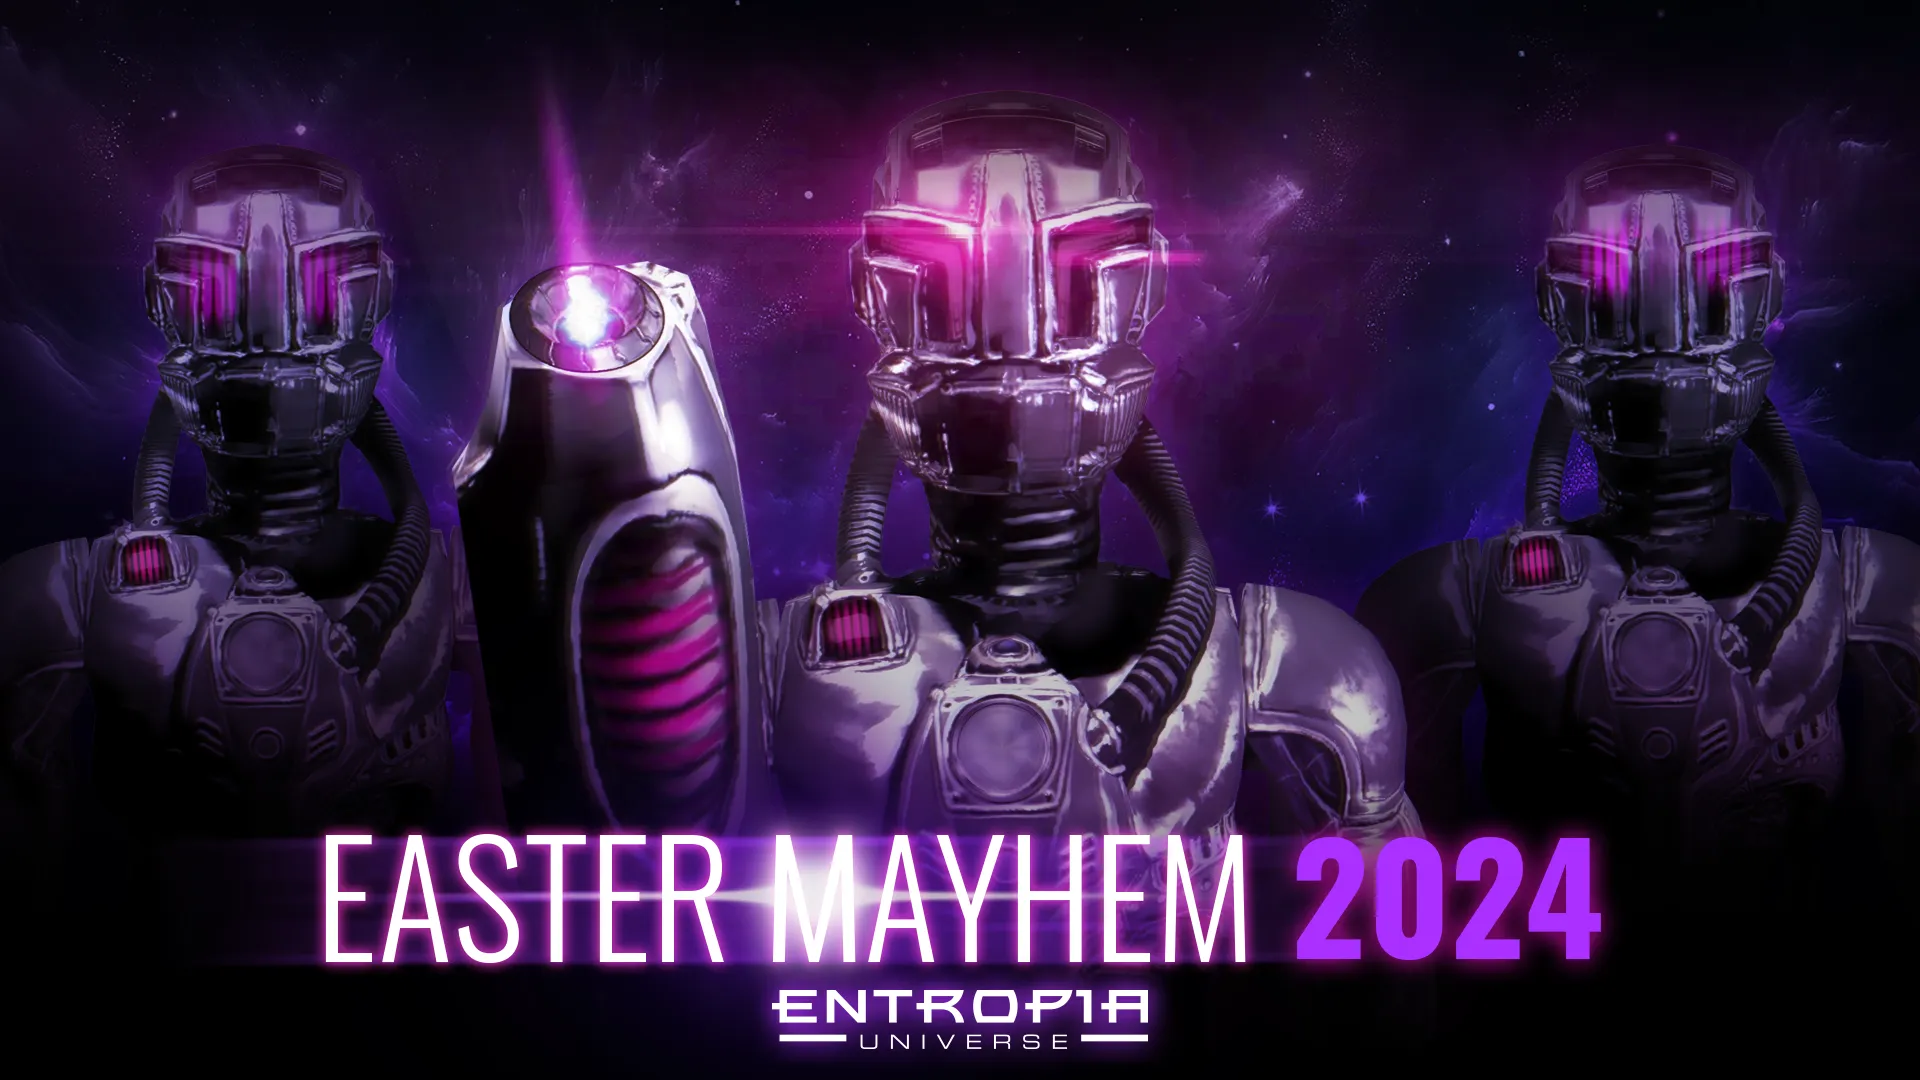 Entropia Universe - Easter Mayhem 2024